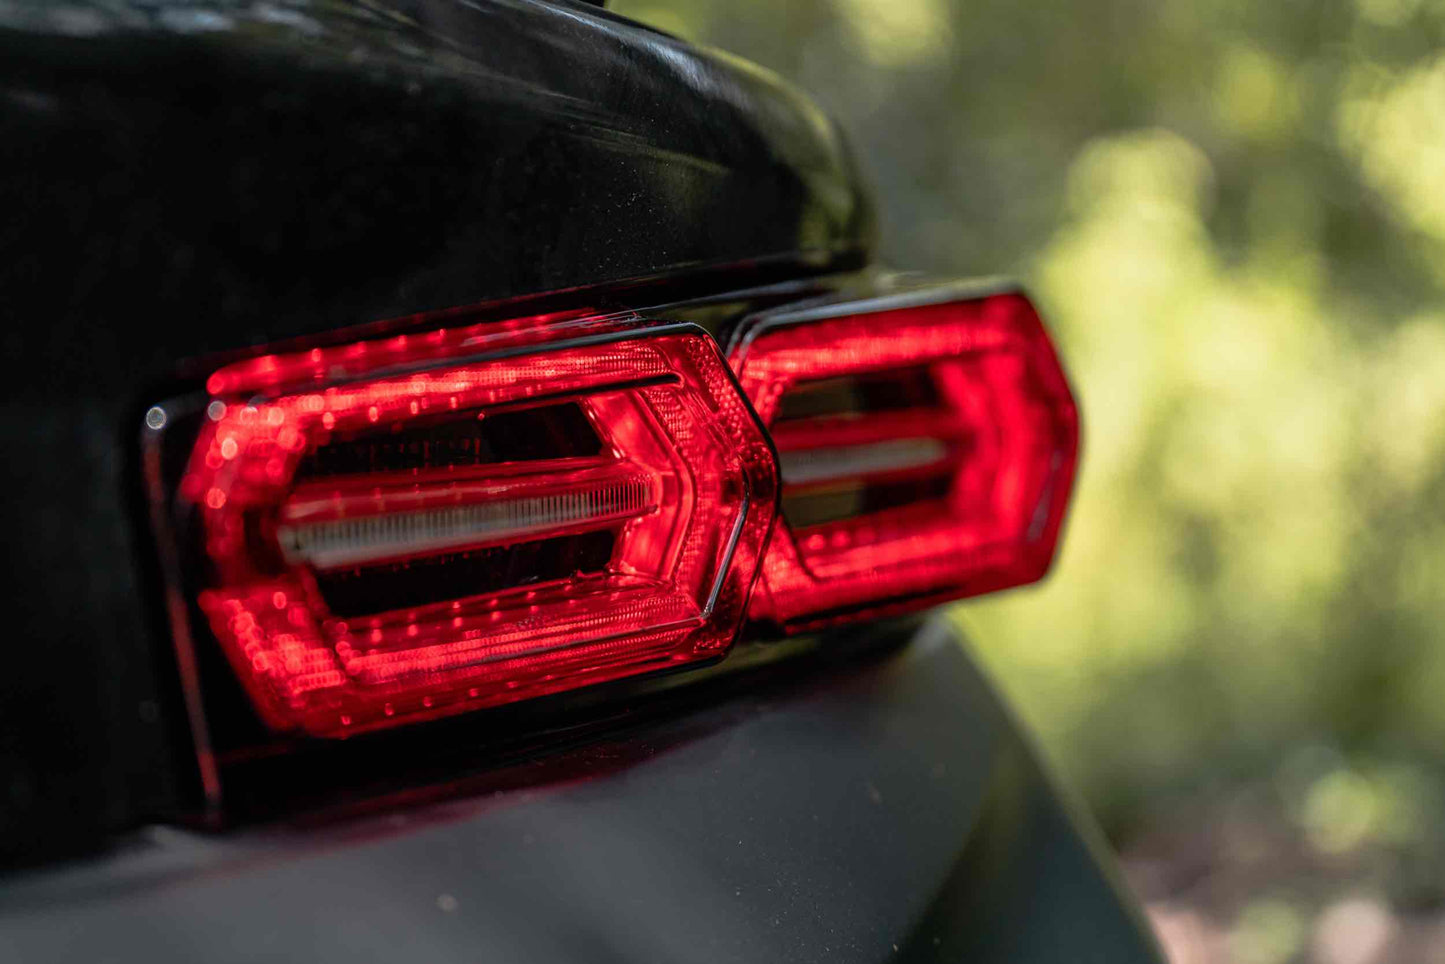 XB LED Tail Lights: Chevrolet Camaro (16-18) (Pair / Facelift / Smoked)